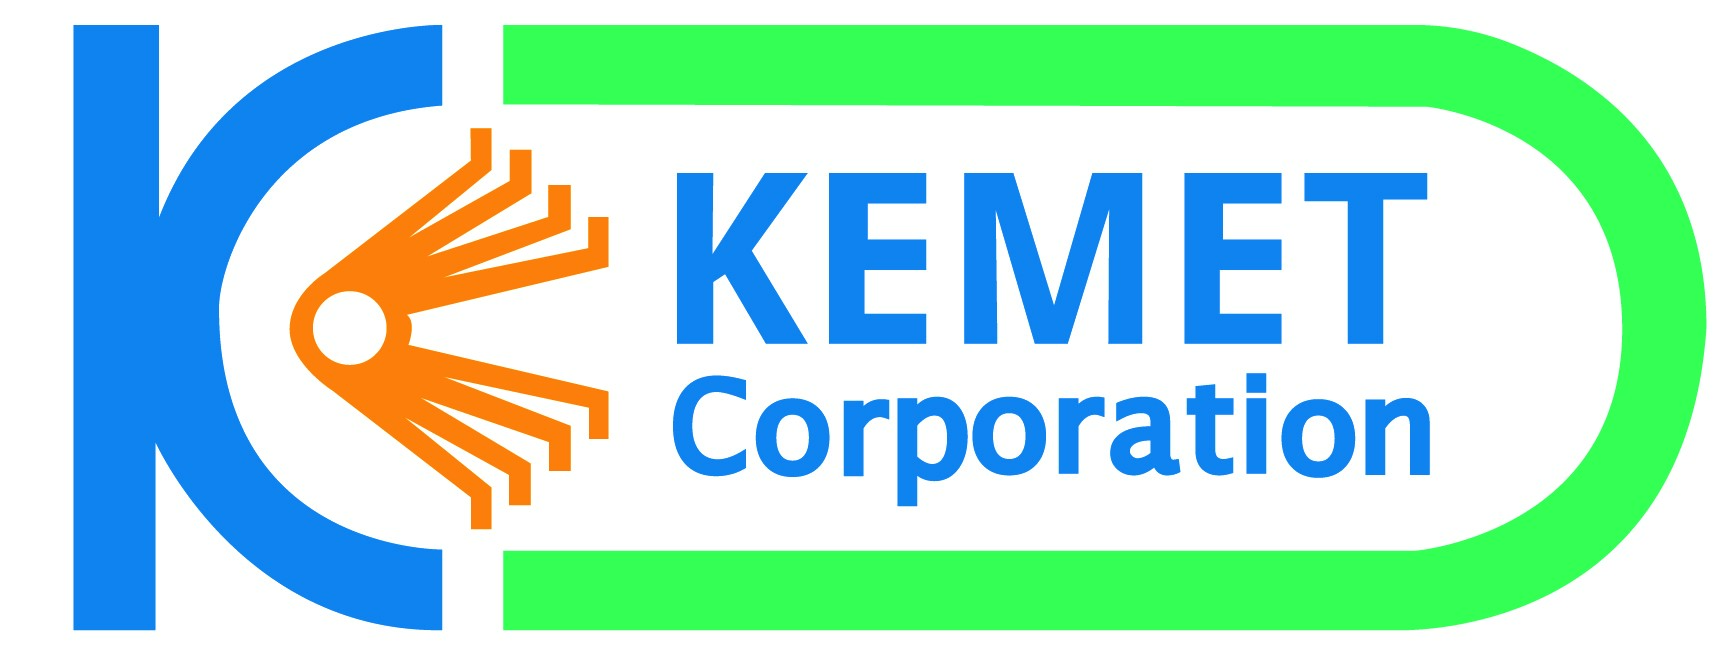 Kemet Corporation